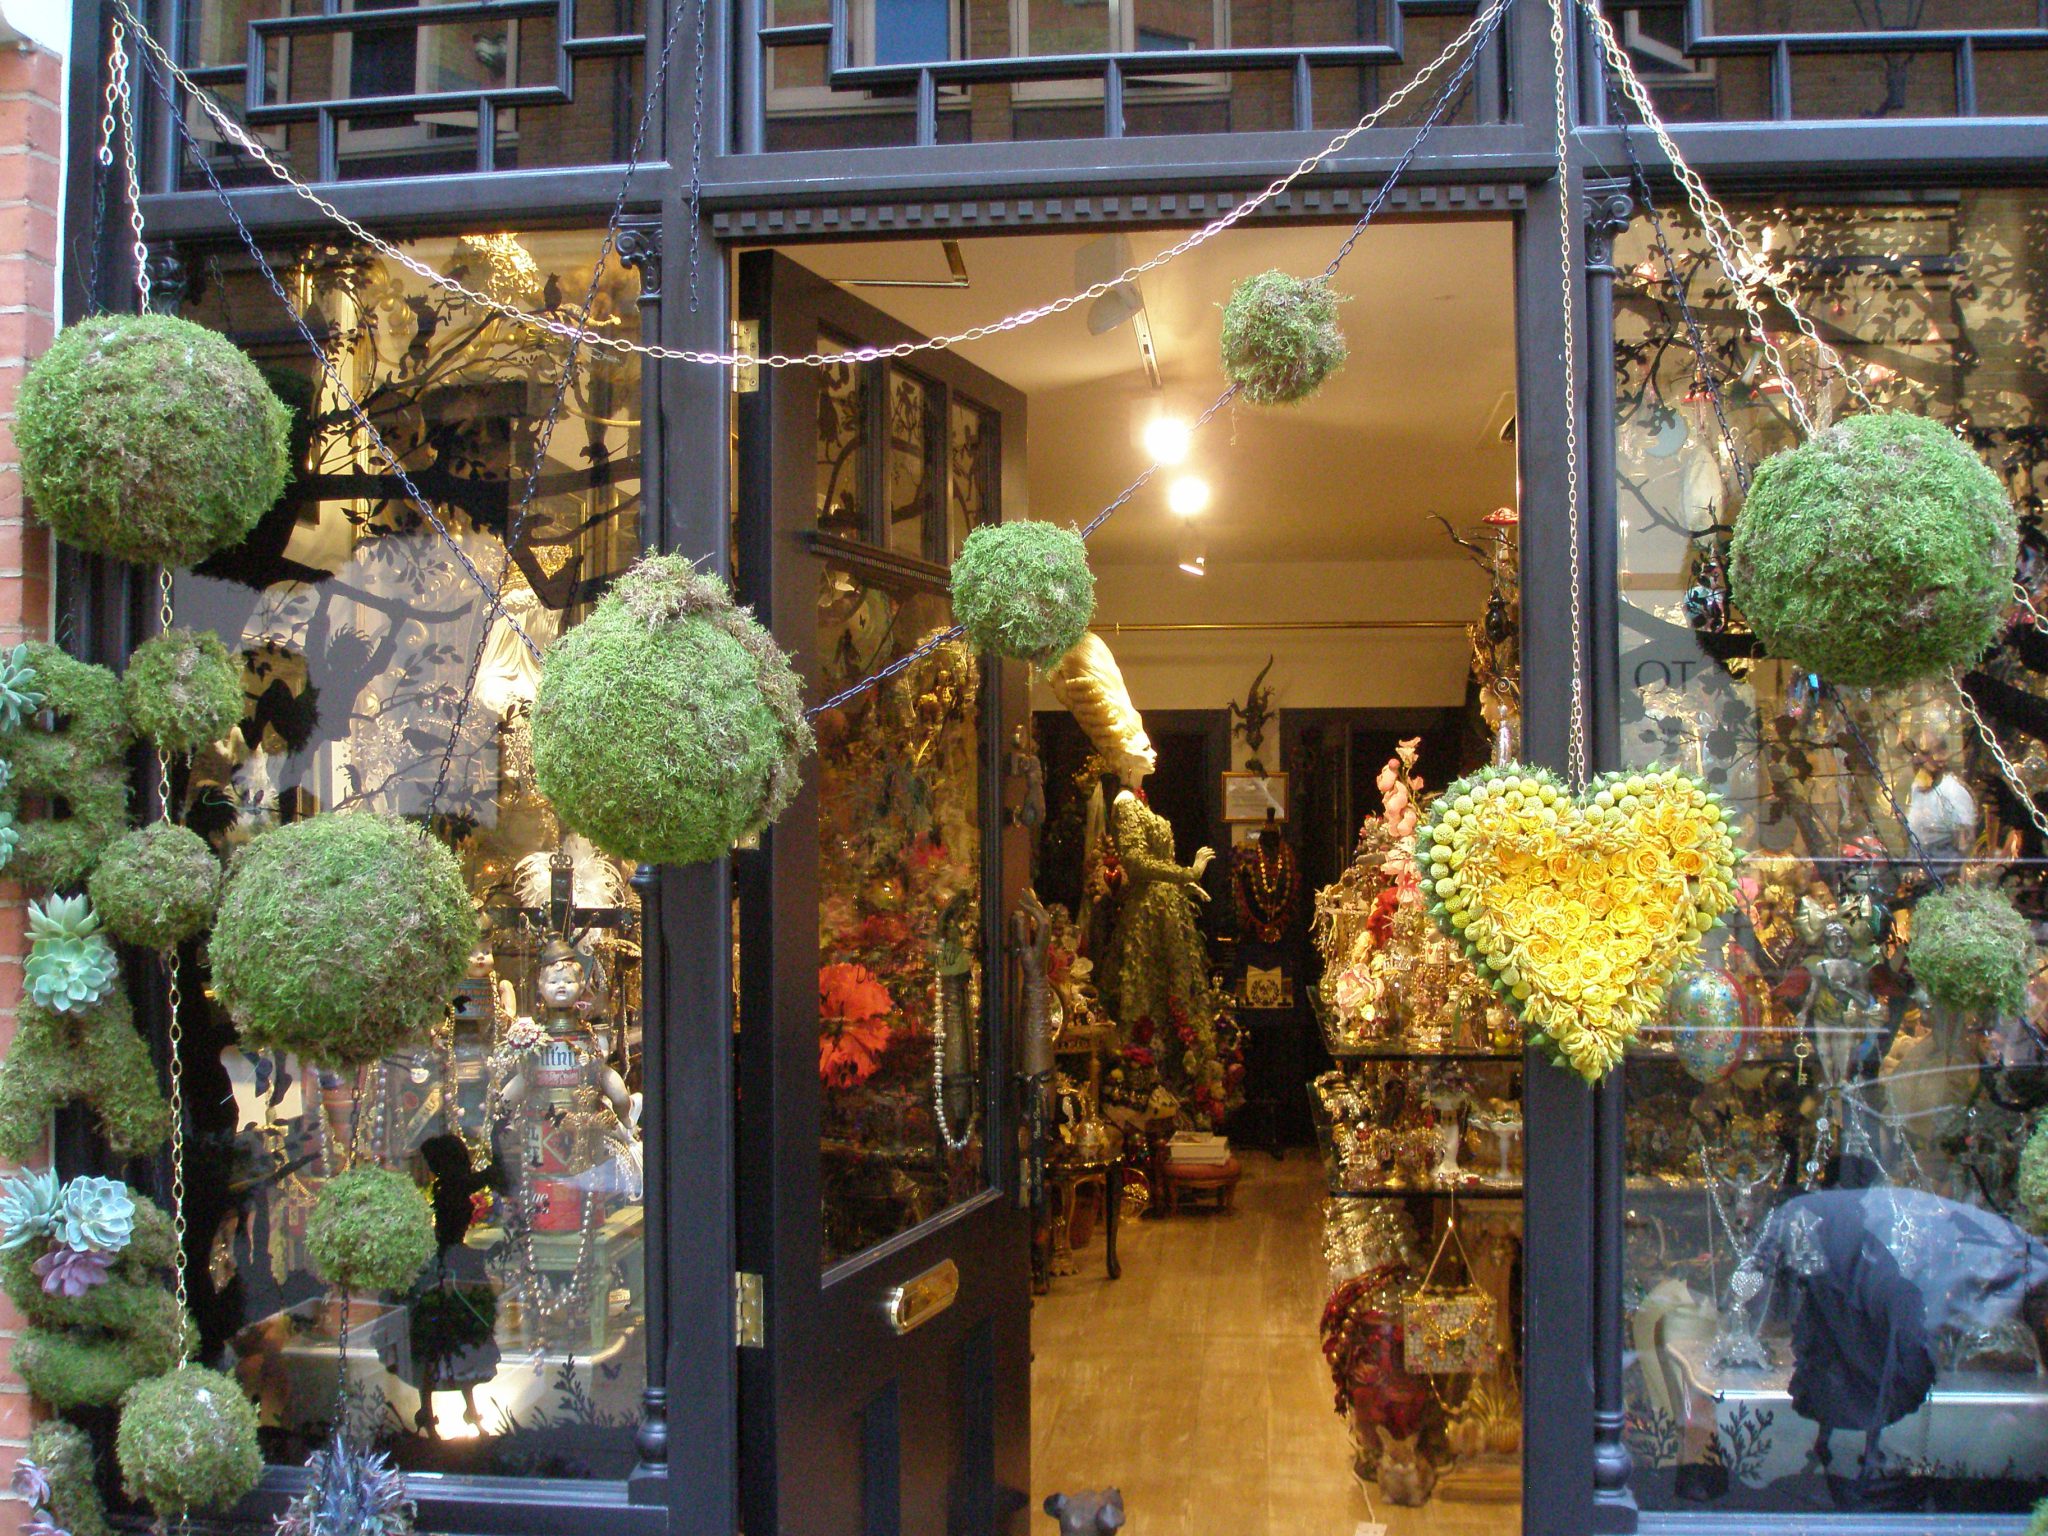 A peek inside Basia's Shop